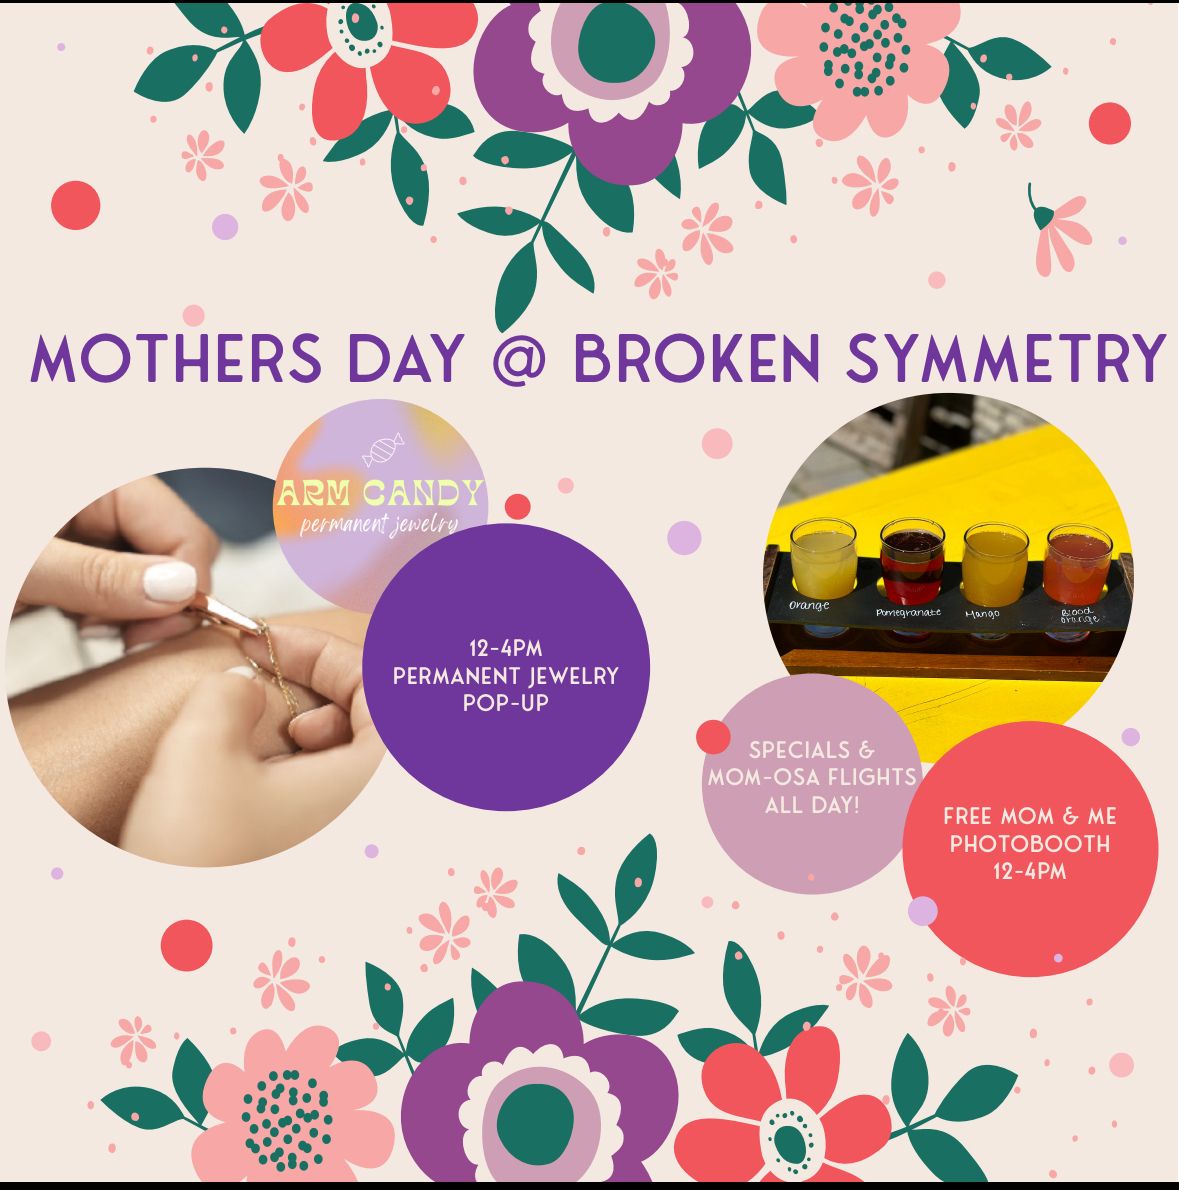 Mothers Day @ Broken Symmetry